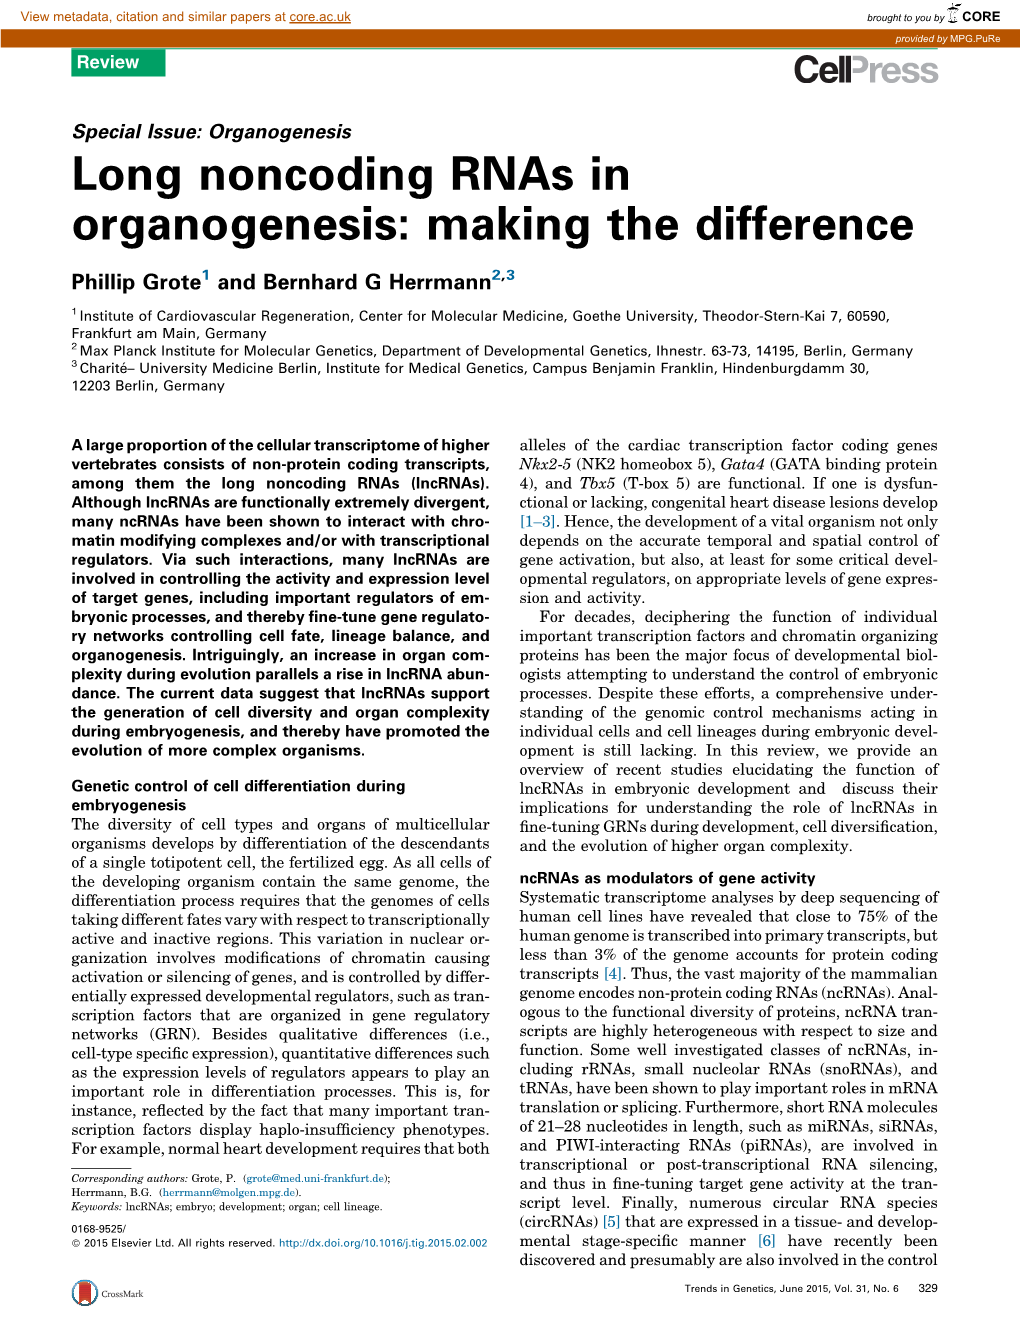 Long Noncoding Rnas in Organogenesis